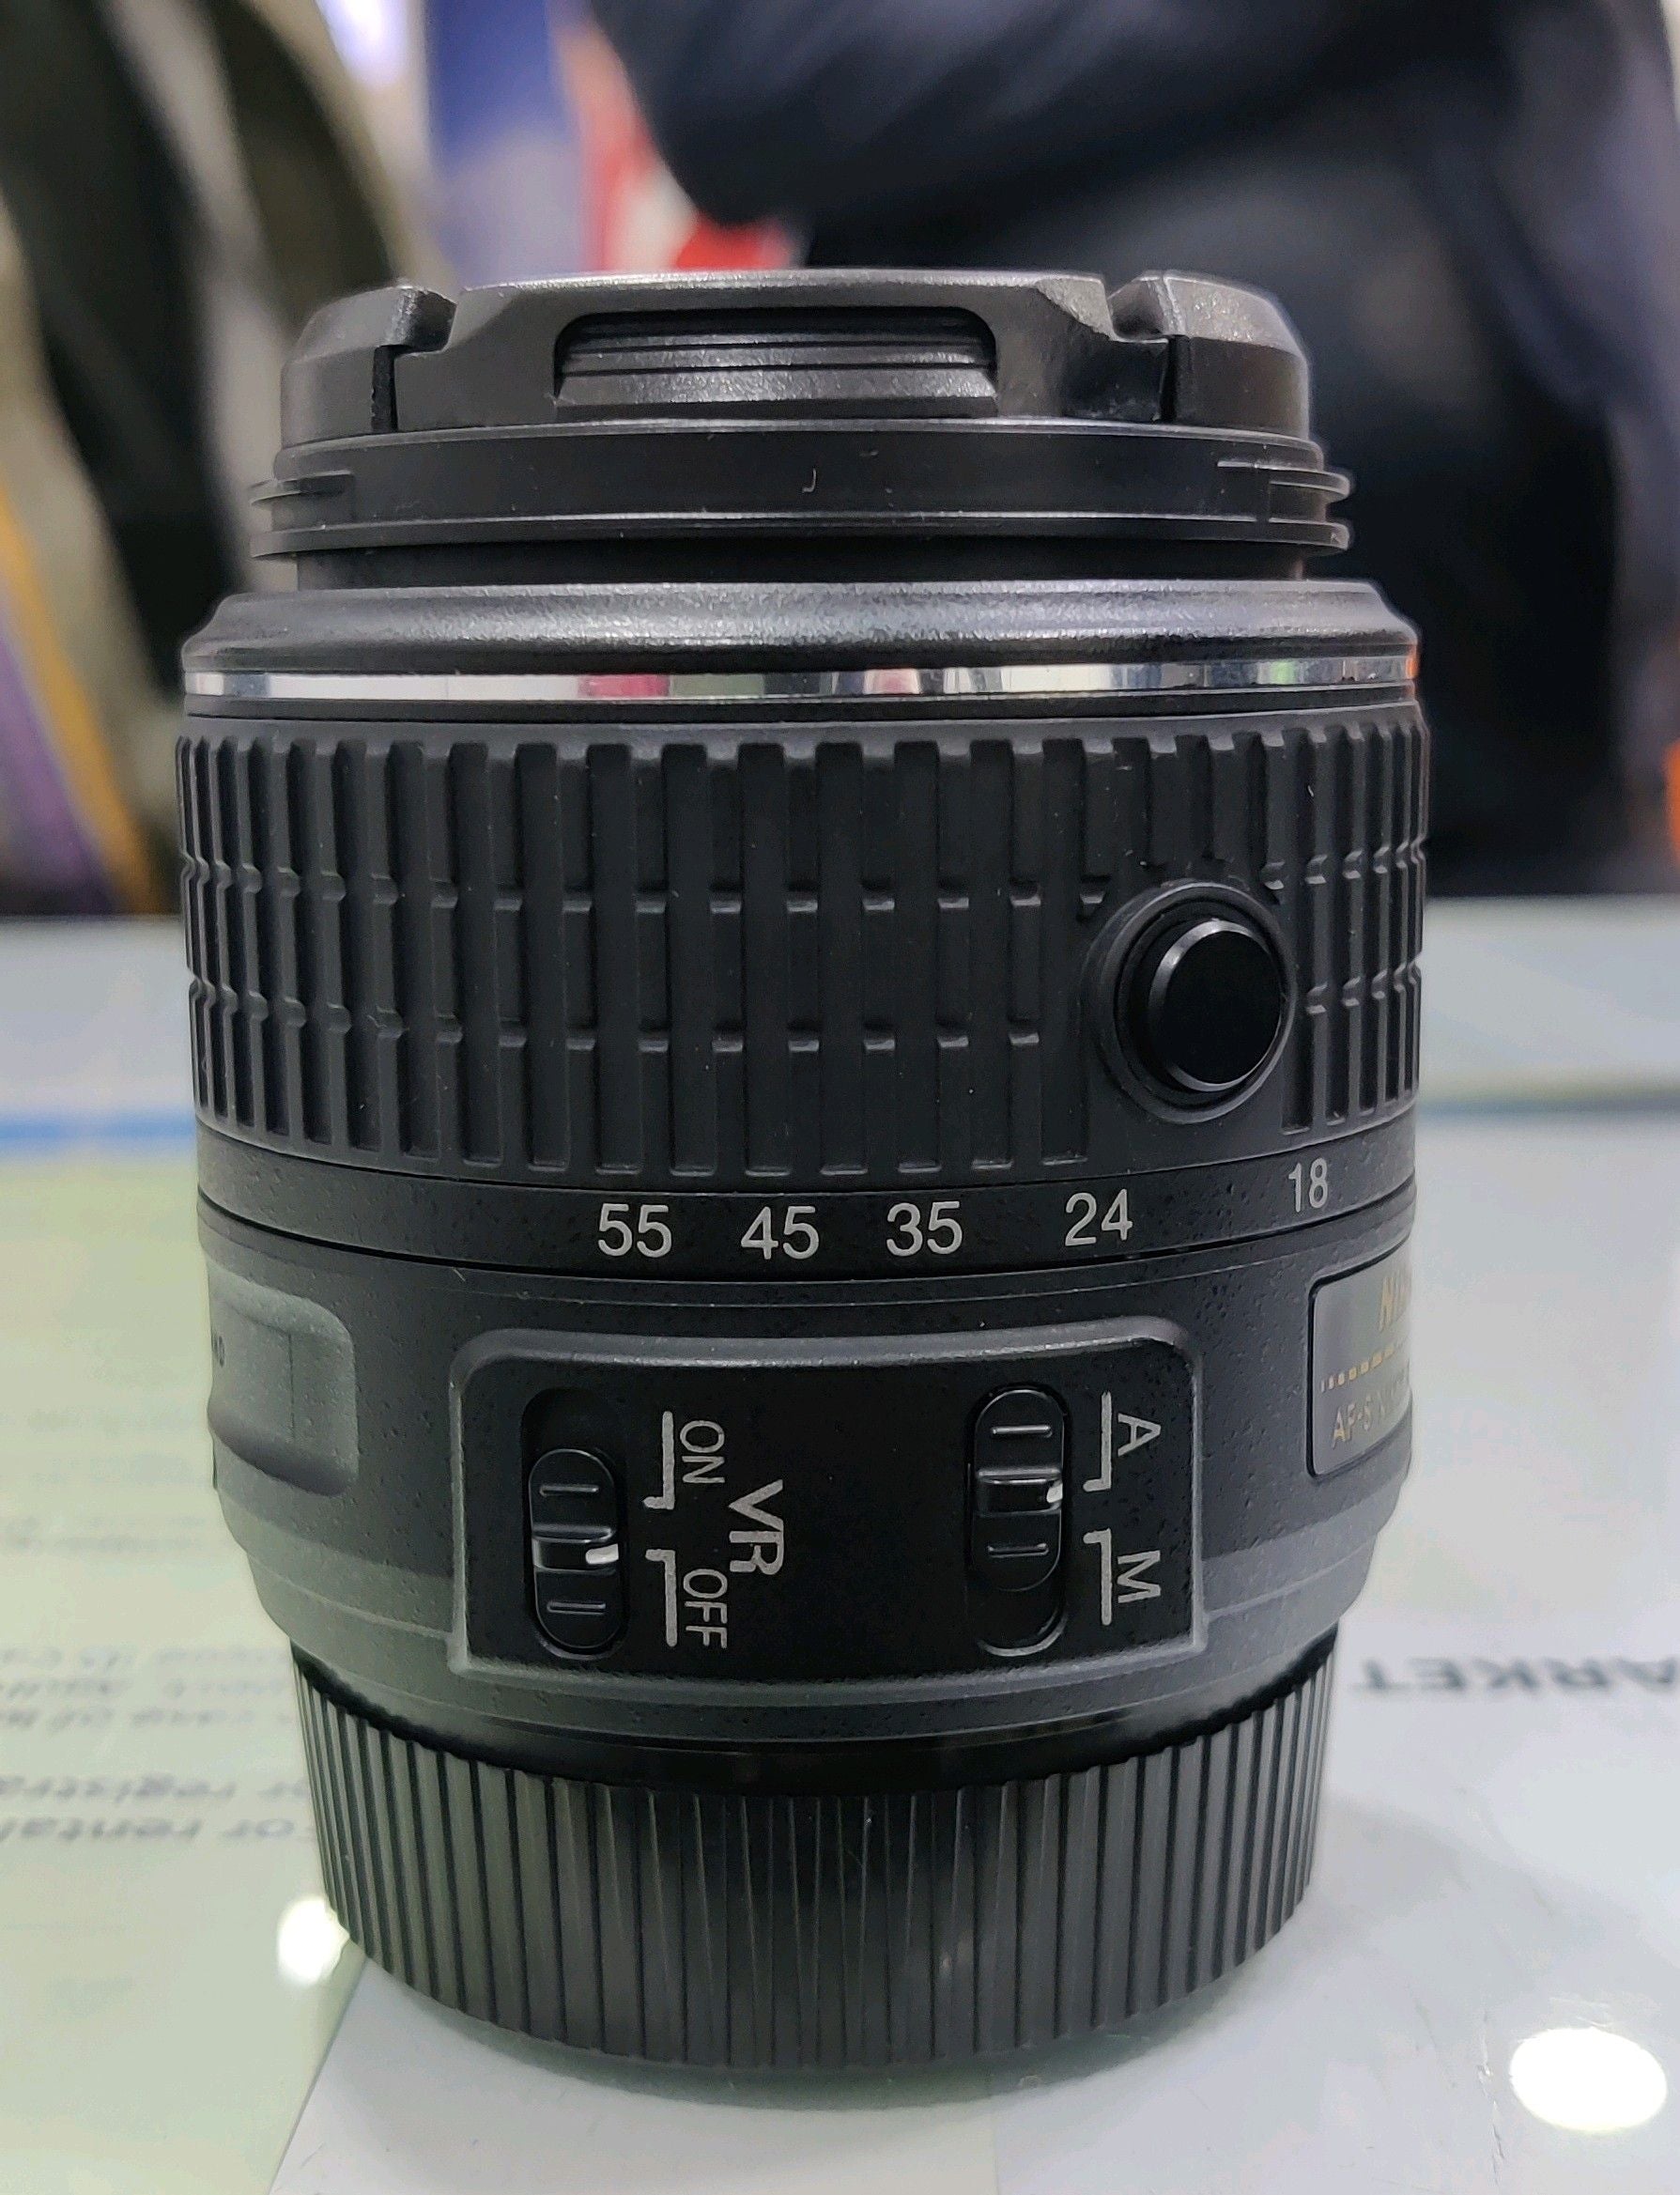 Used Nikon AF S 18 55 mm VR F 3.5-5.6 GII